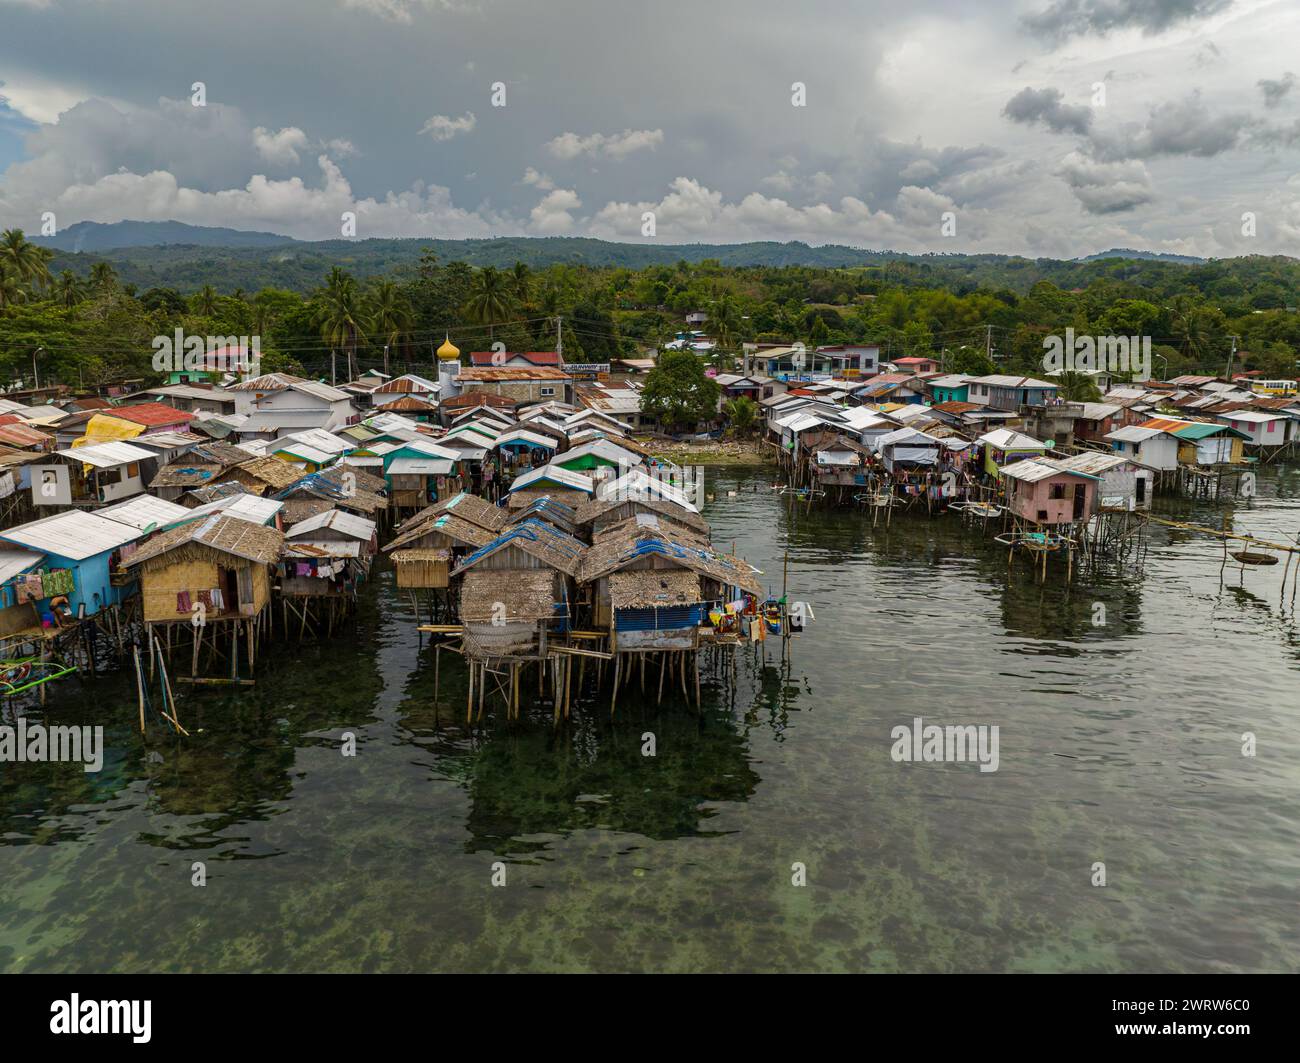 Wooden houses on stilts in Zamboanga. Mindanao, Philippines. Drone view. Stock Photo